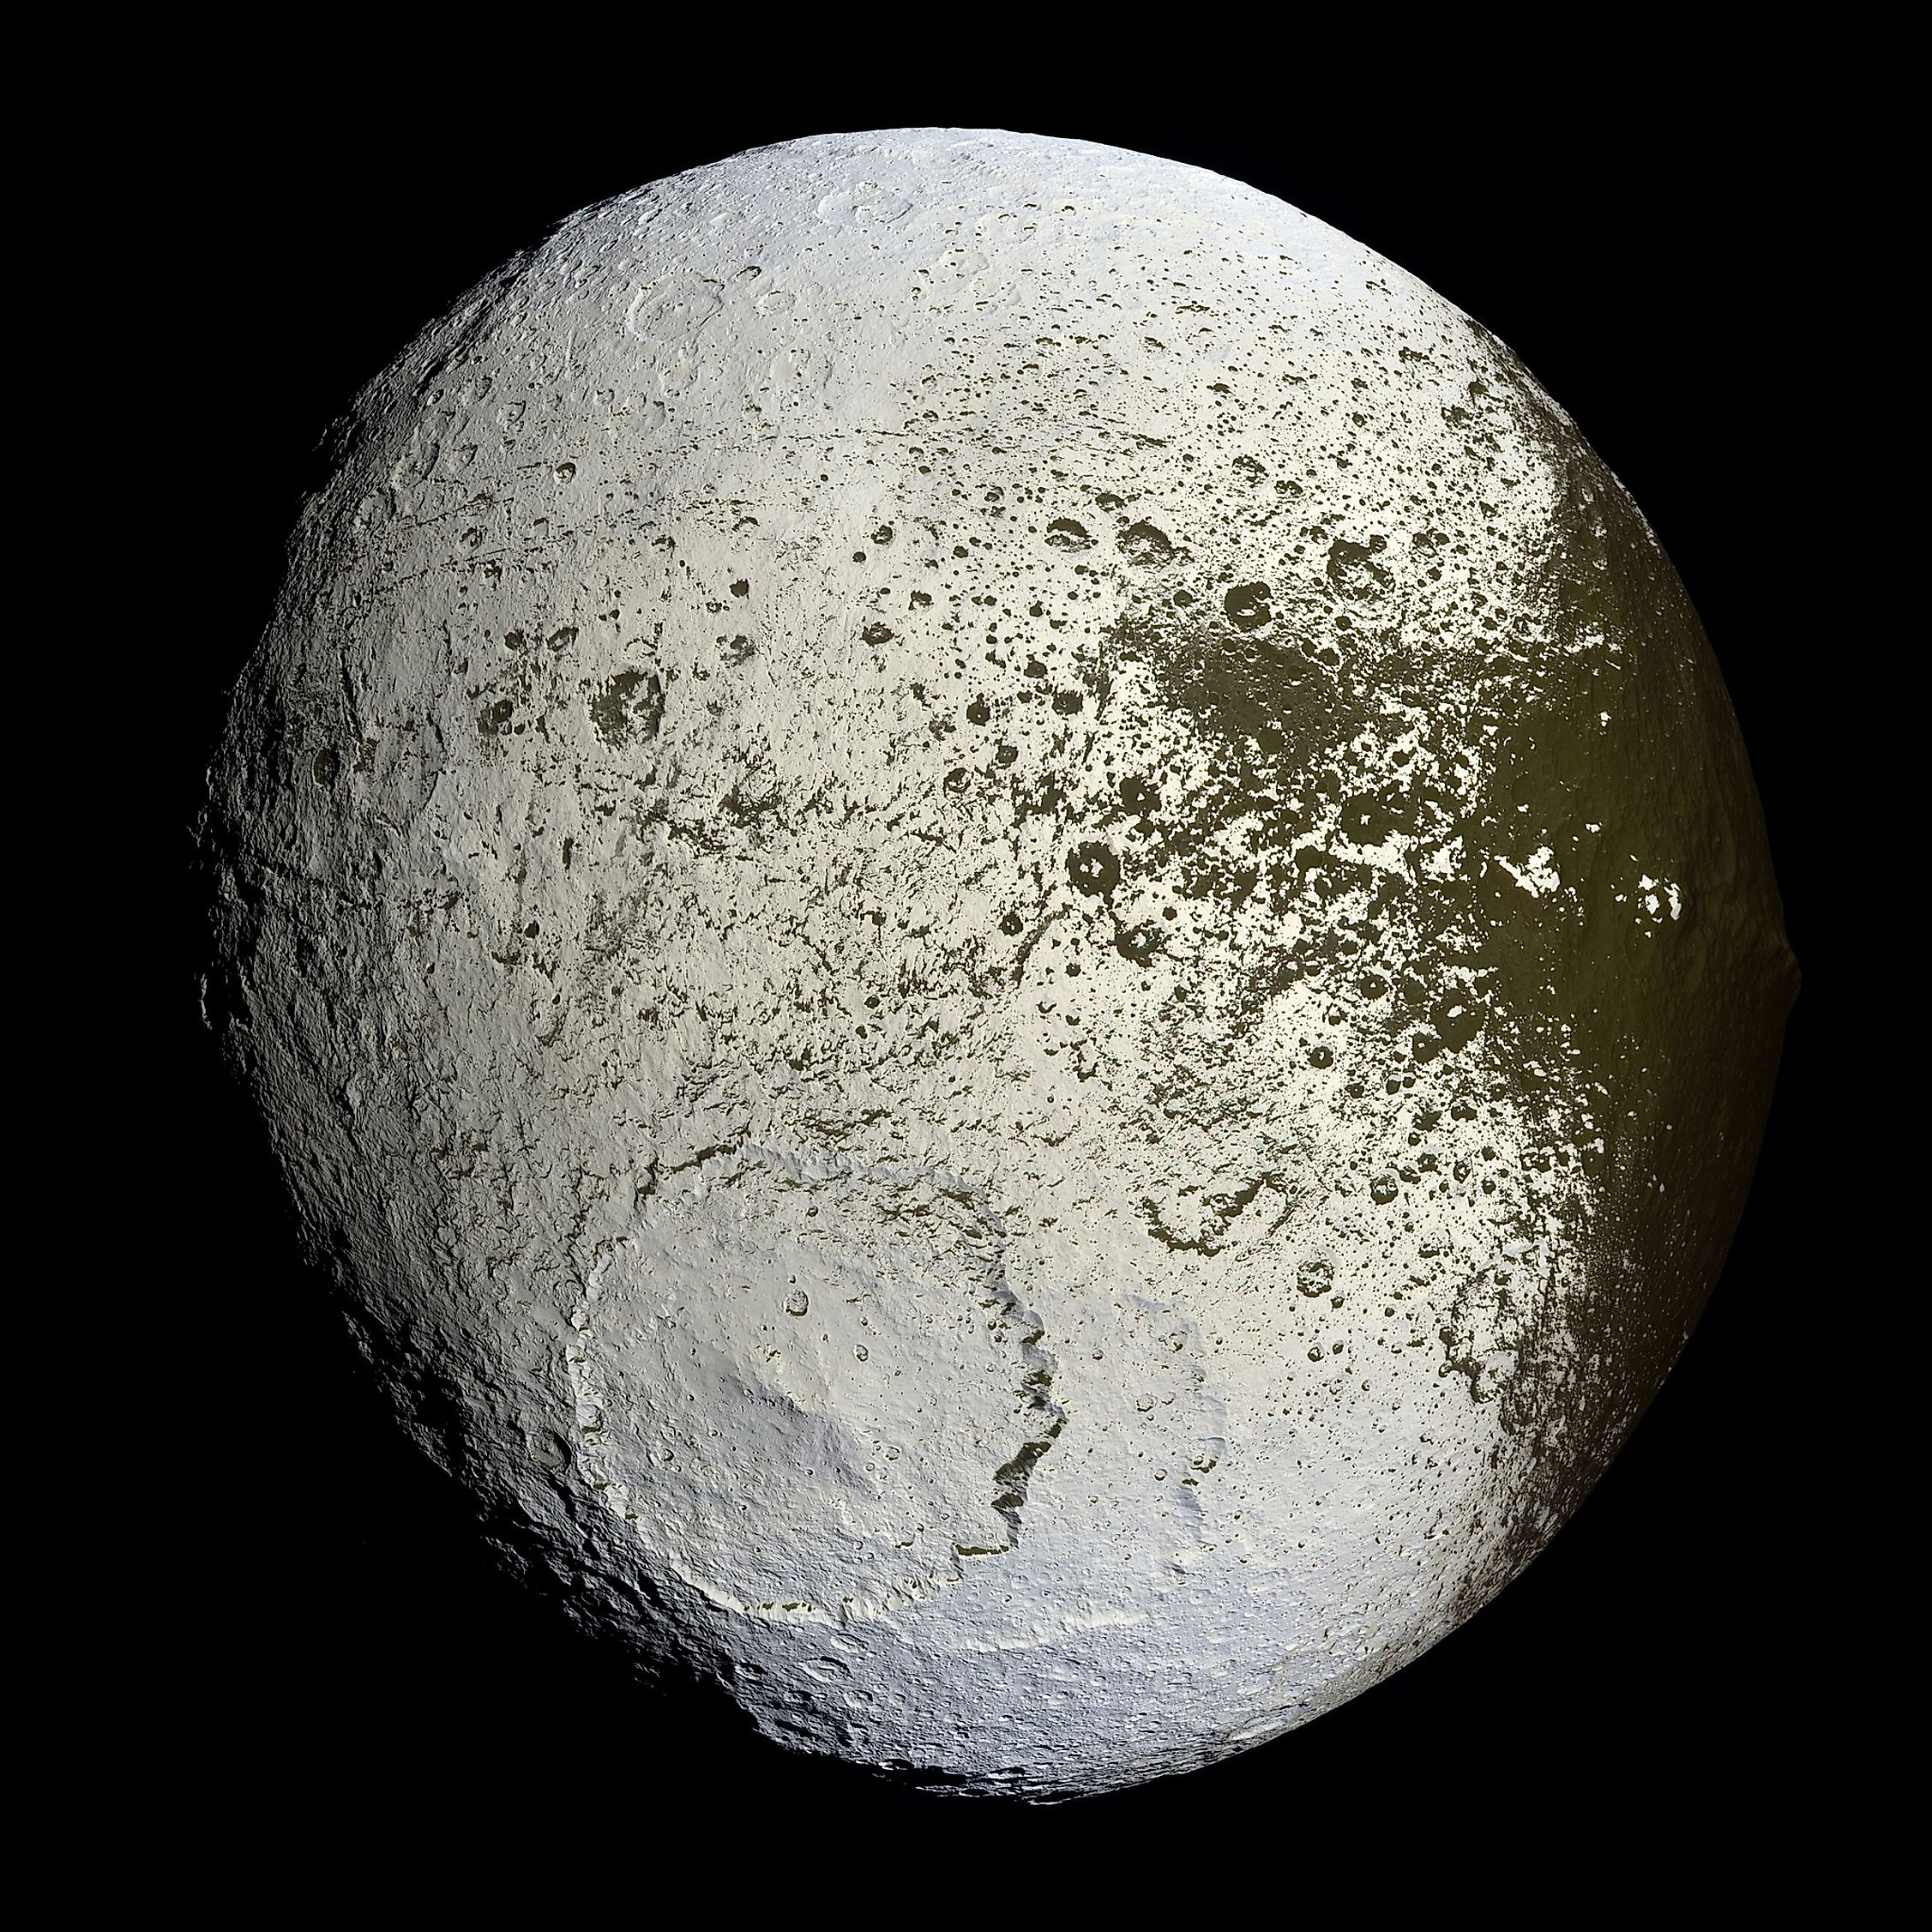 Cassini image of Iapetus. Image credit: NASA/ESA